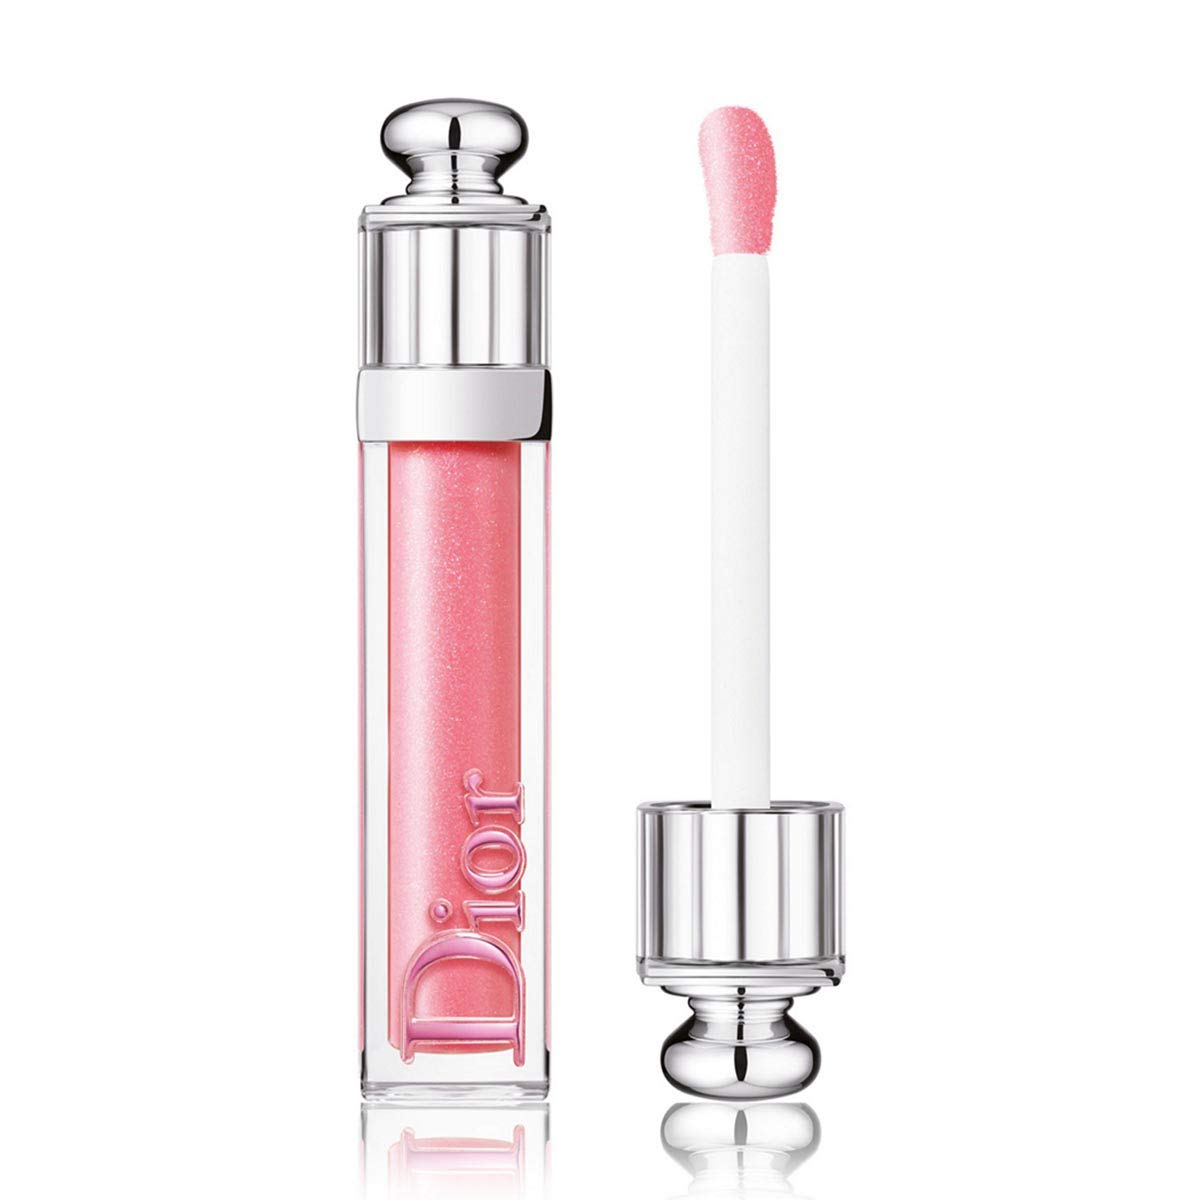 Amazoncom  Dior Dior Addict Stellar Shine Lipstick  553 Magnetic Smile   Beauty  Personal Care